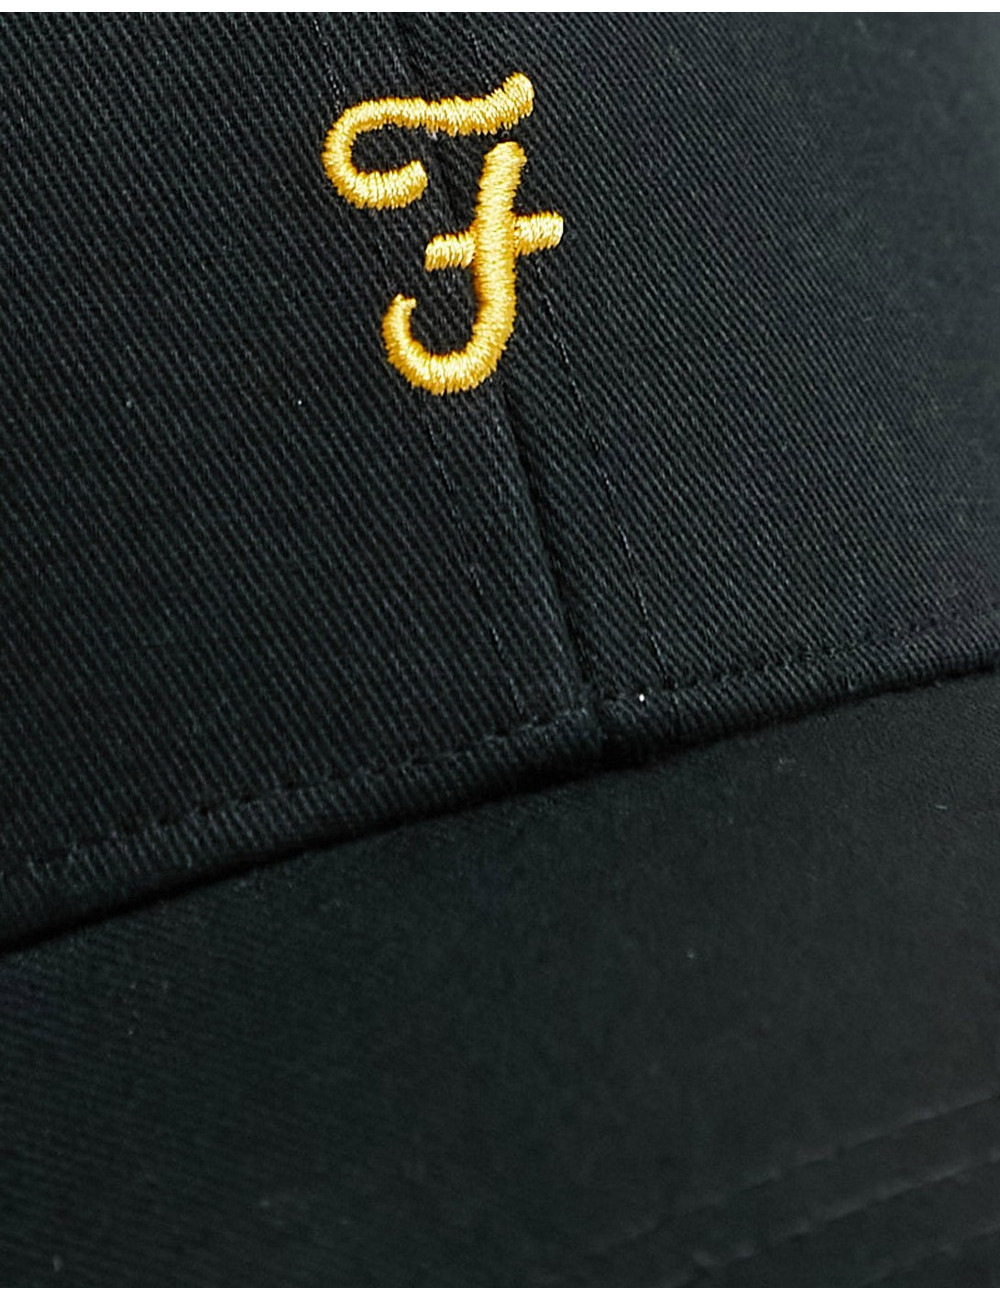 Farah logo cap in black